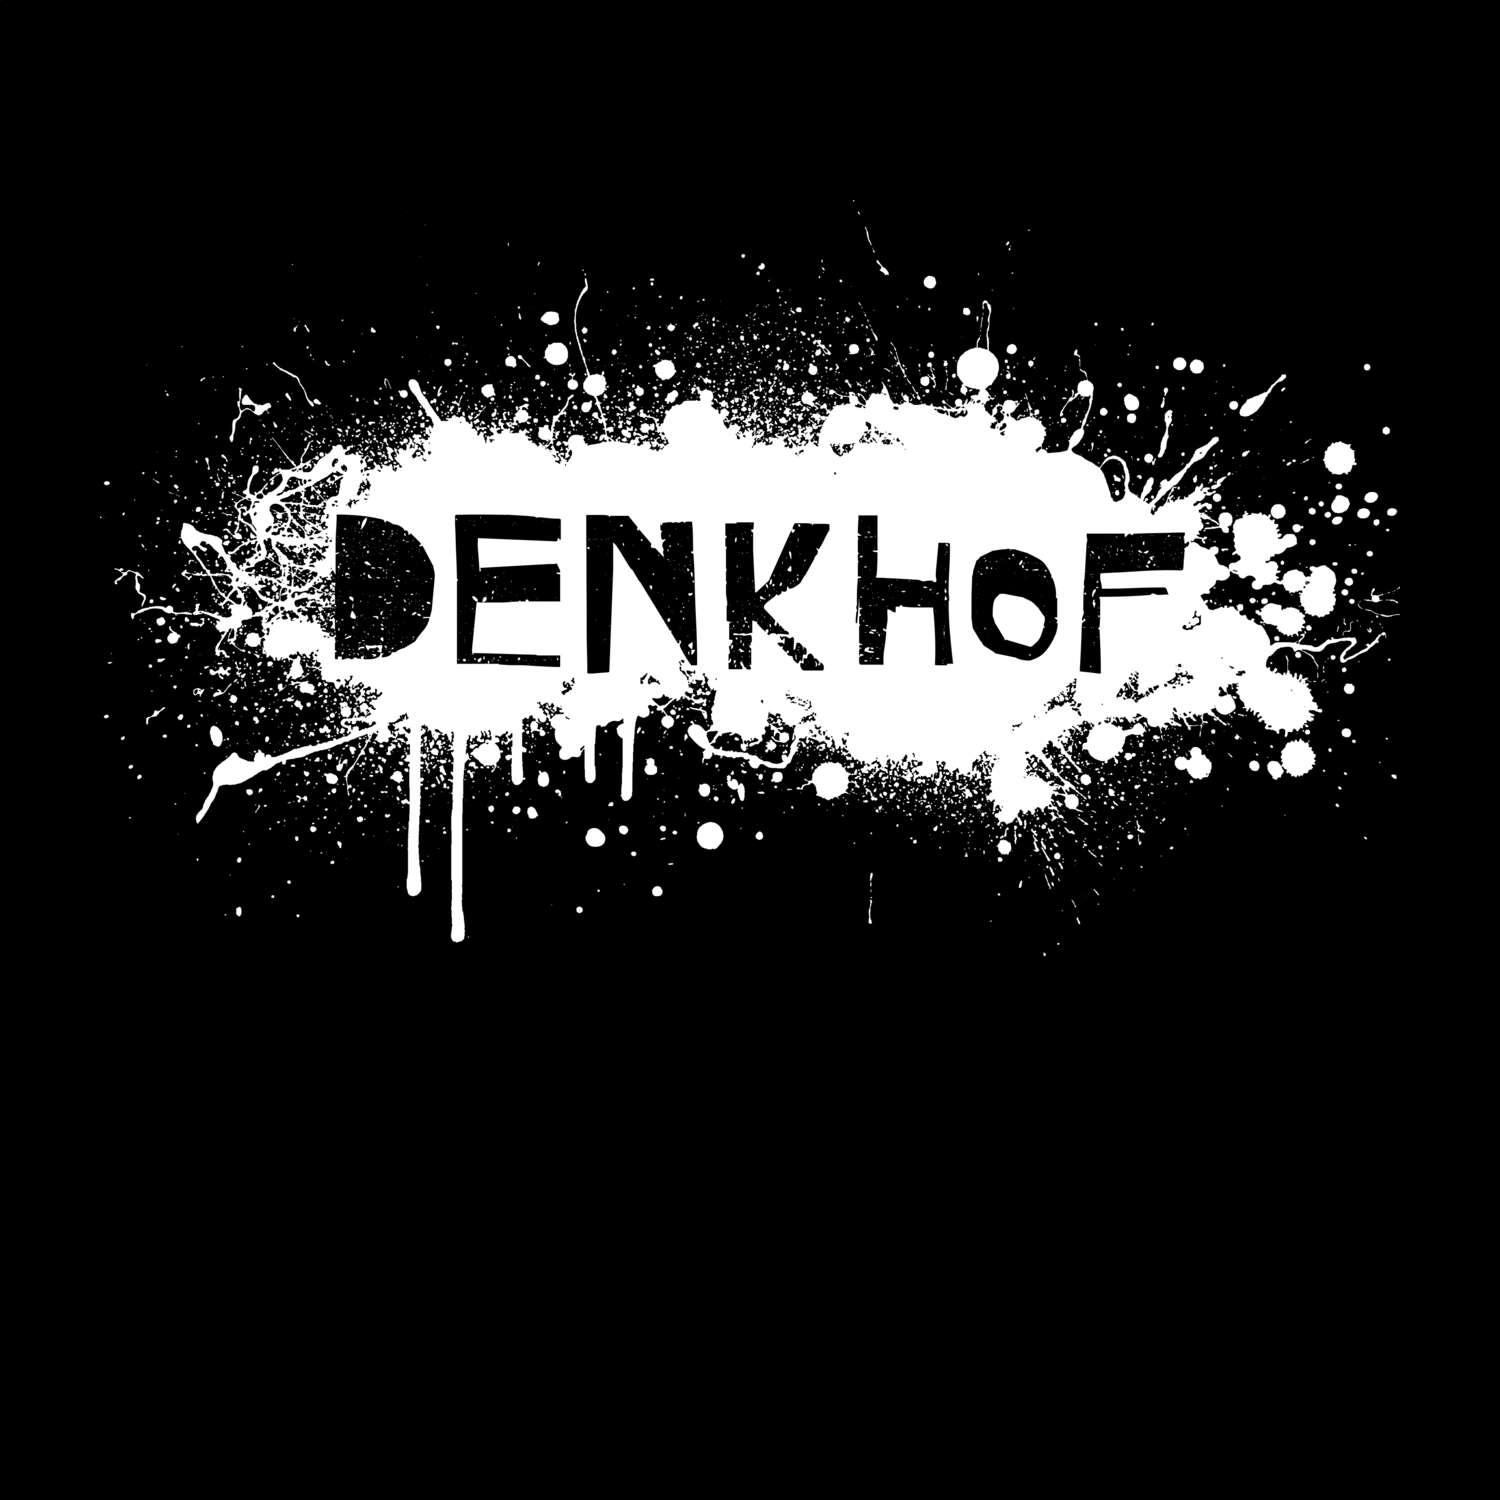 Denkhof T-Shirt »Paint Splash Punk«